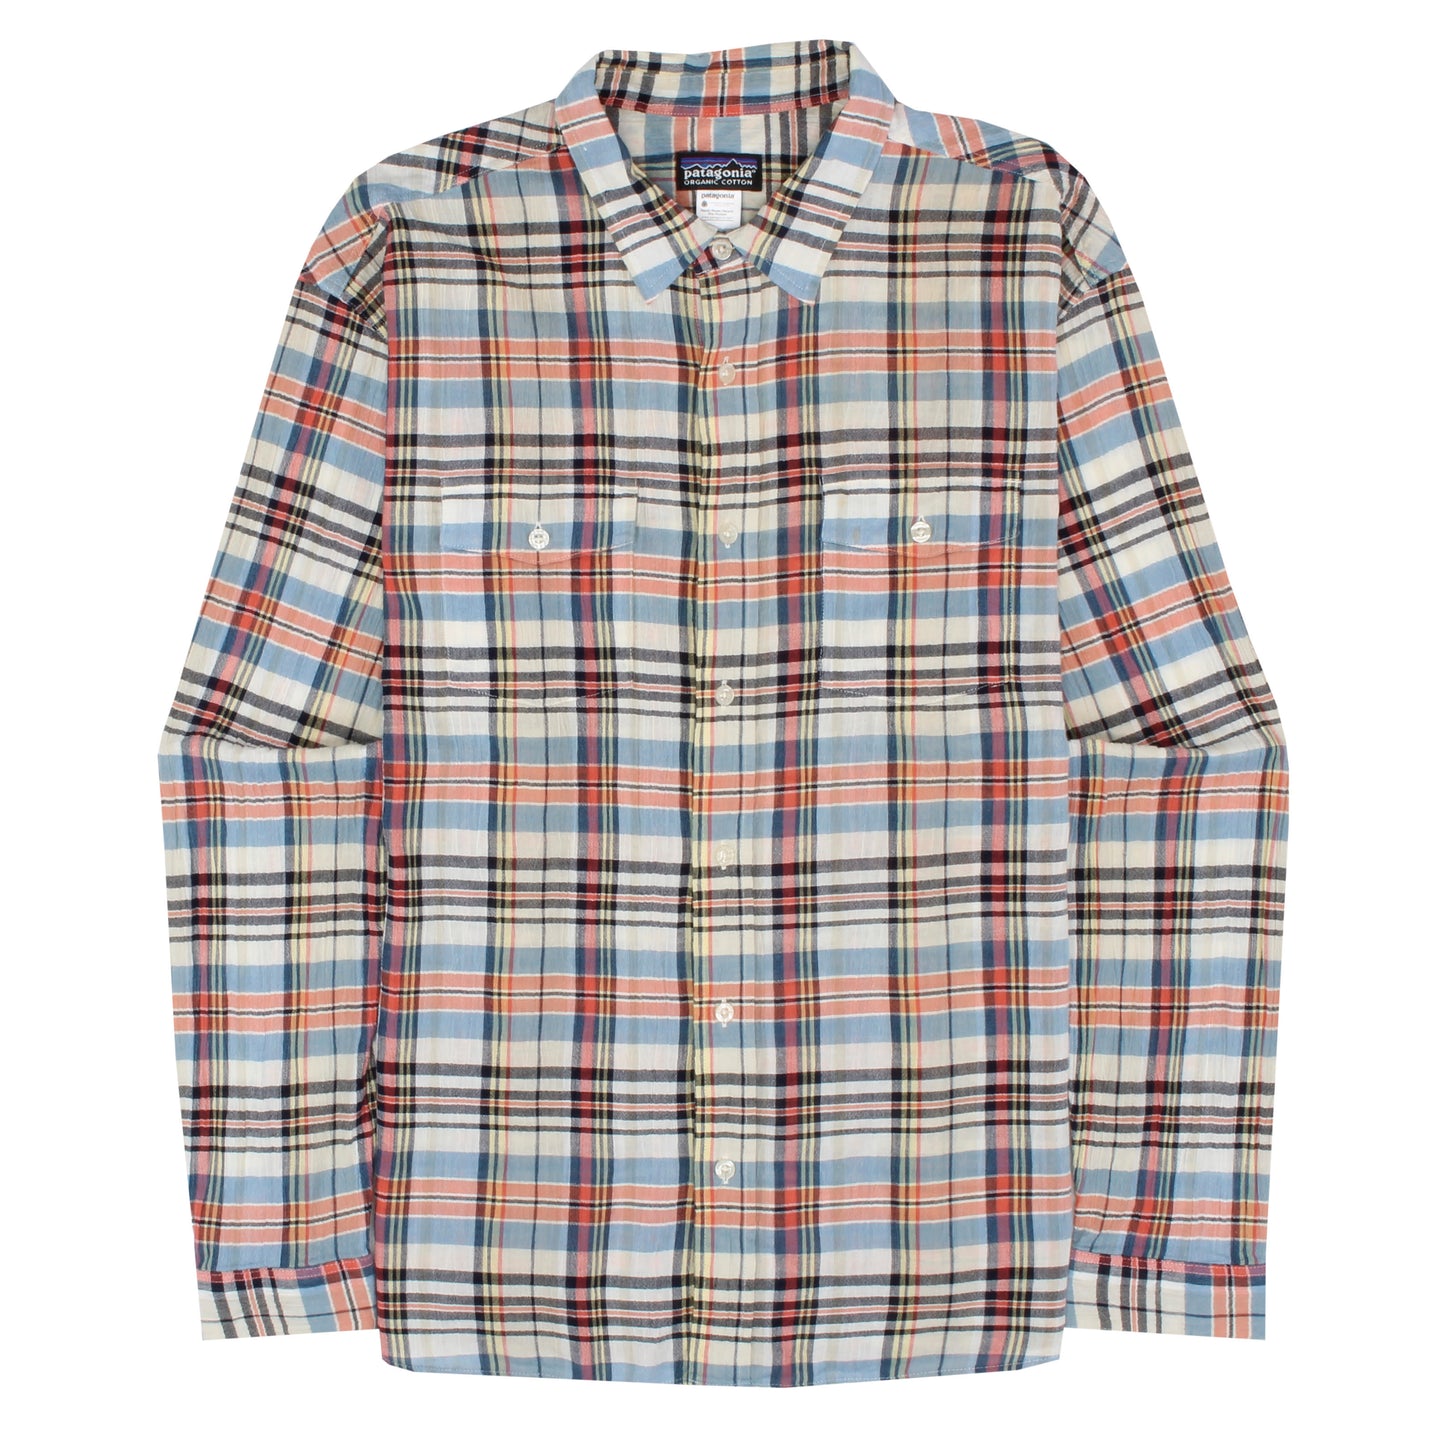 Men's Long-Sleeved A/C® Steersman Shirt